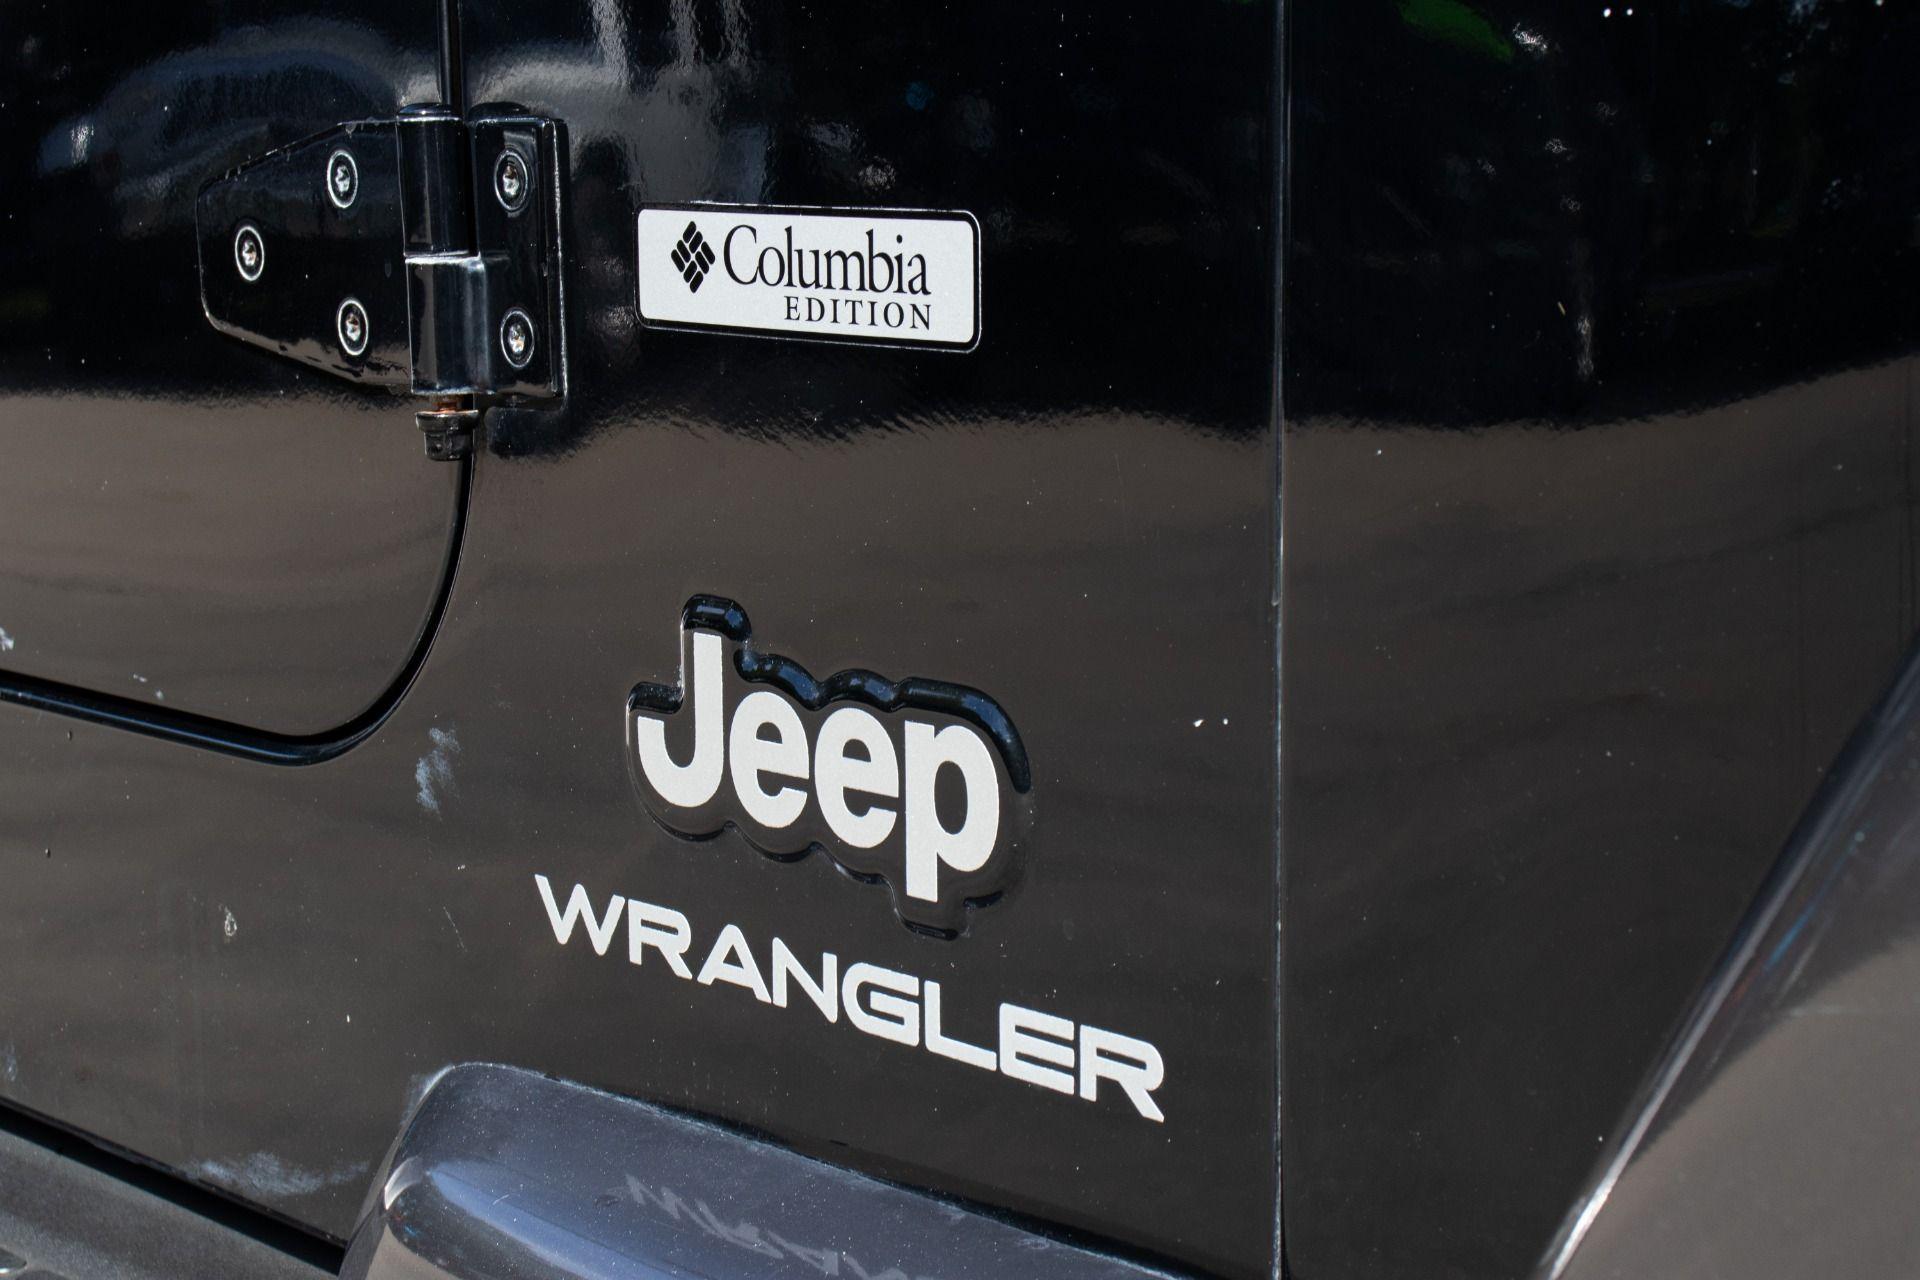 Jeep Wrangler X Logo - Used 2004 Jeep Wrangler X ($995). Select Jeeps Inc